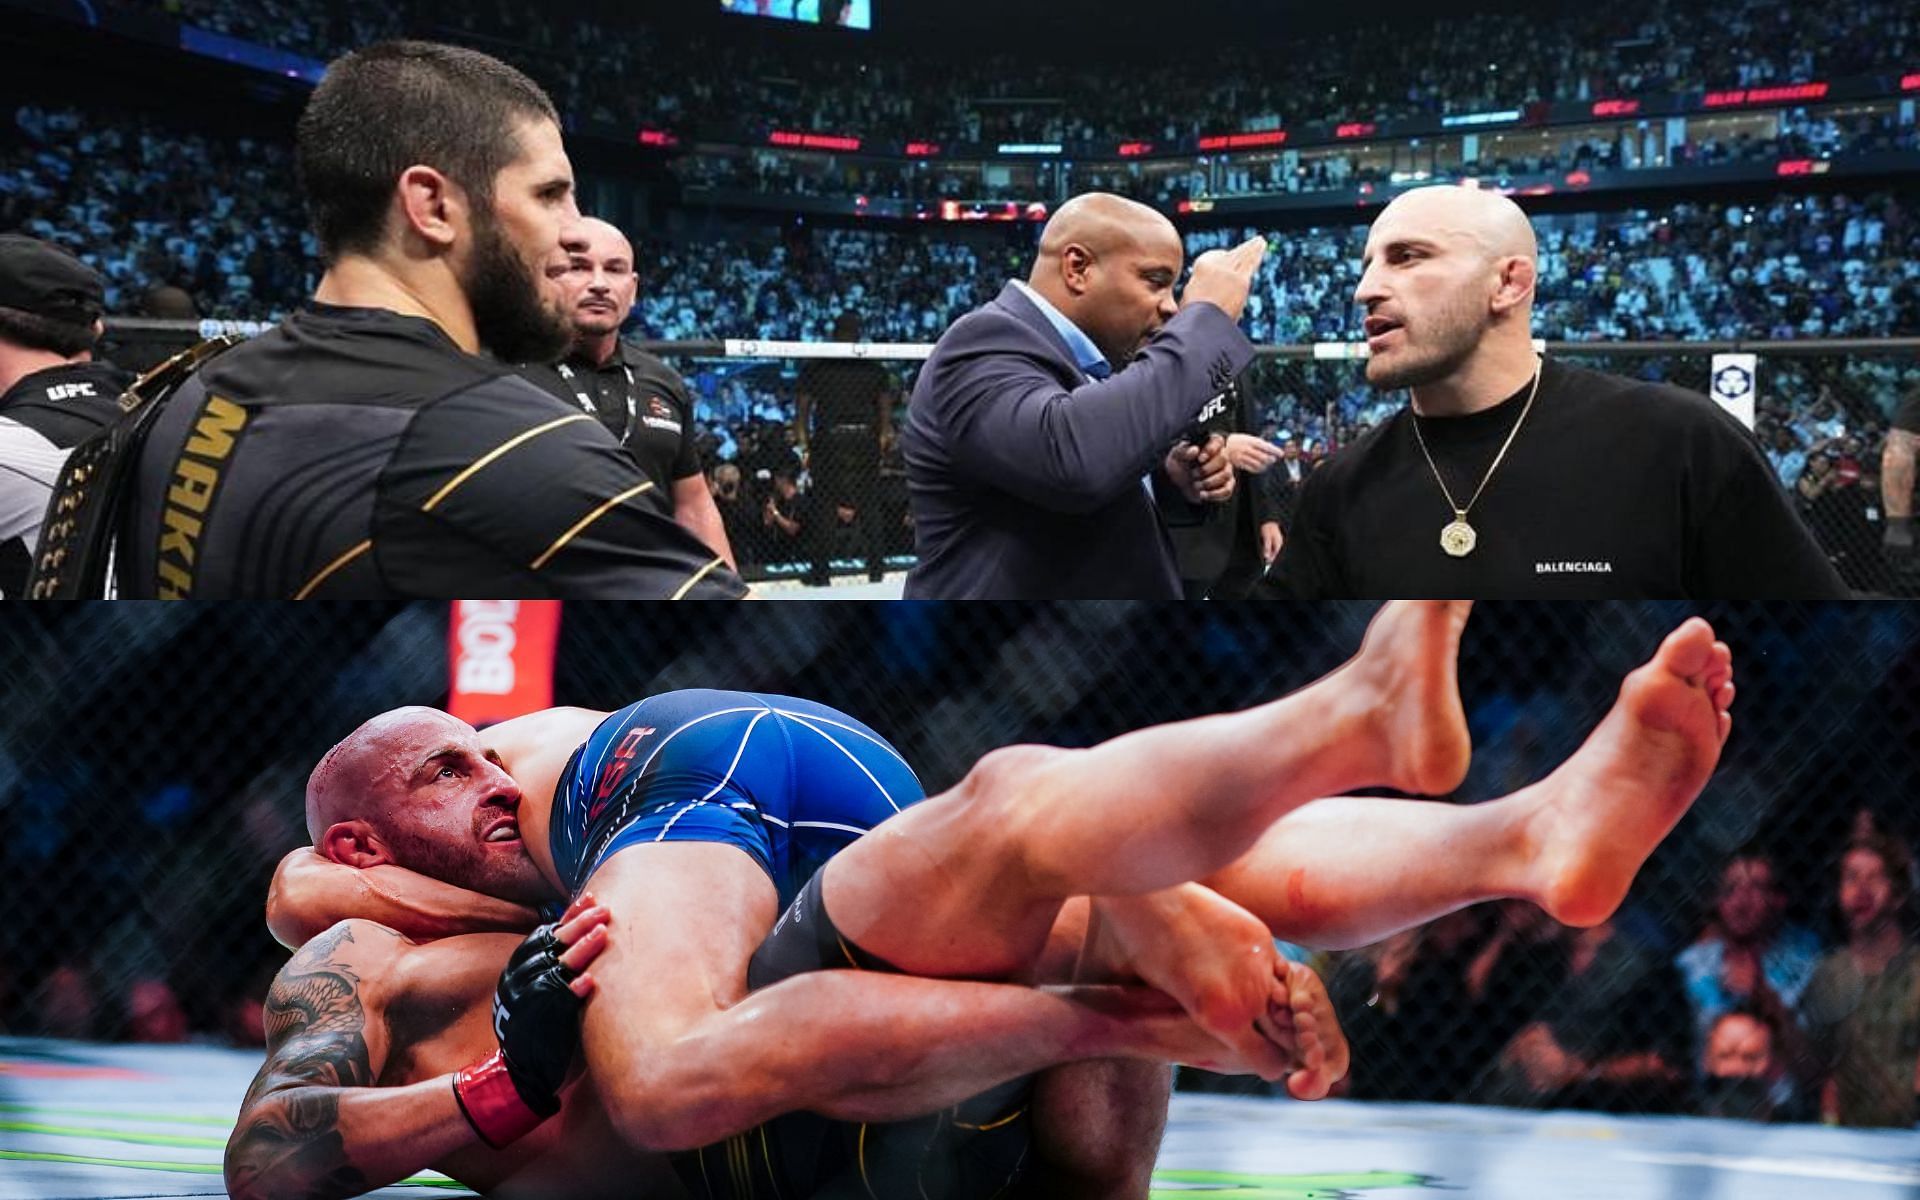 Islam Makhachev with Alexander Volkanovski (Top), Alexnader Volkanovski vs. Brian Ortega (Bottom) [Image courtesy: @alexvolkanovski on Instagram, Getty]